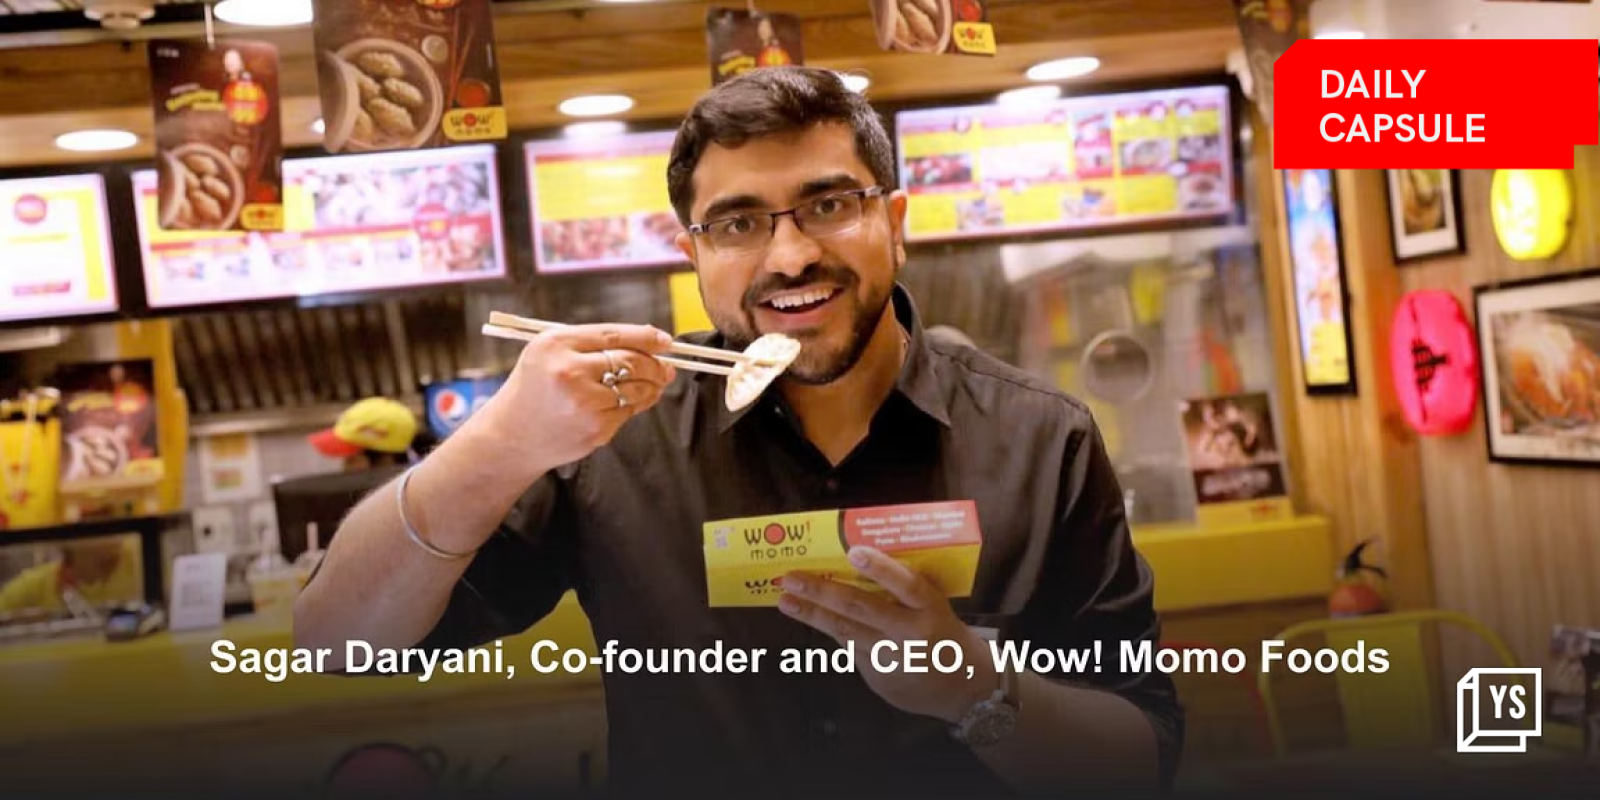 Wow! Momo Foods’ global dreams; Odisha's startup hub plans